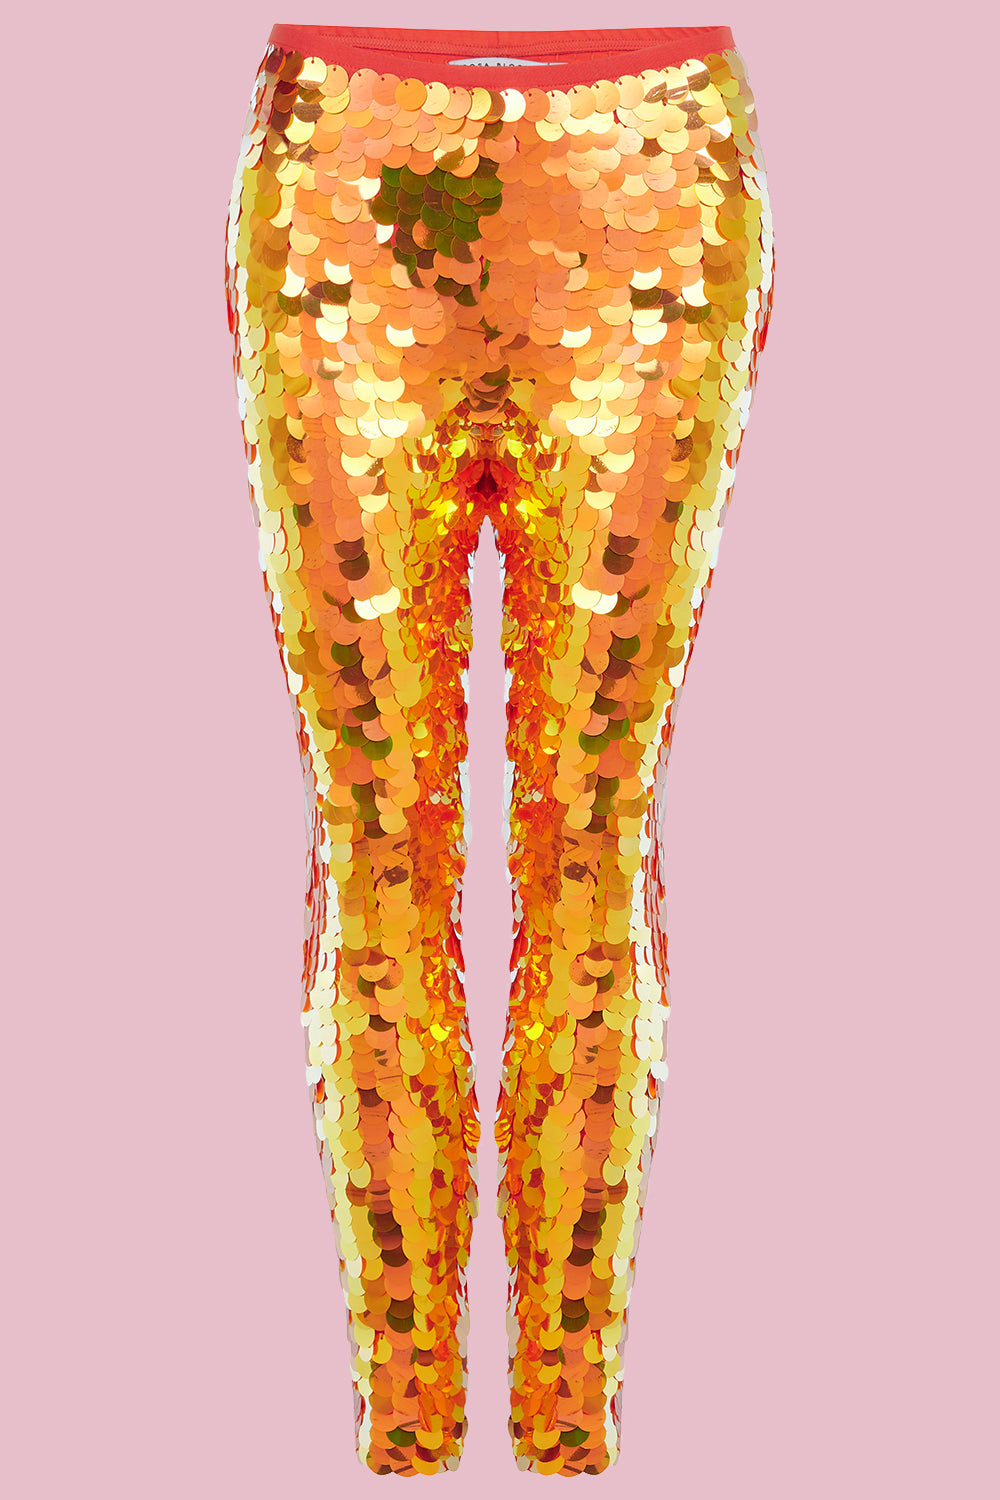 Rose Gold Sequin Pants Rose Gold Leggings Rose Gold Sequin Leggings -   Canada